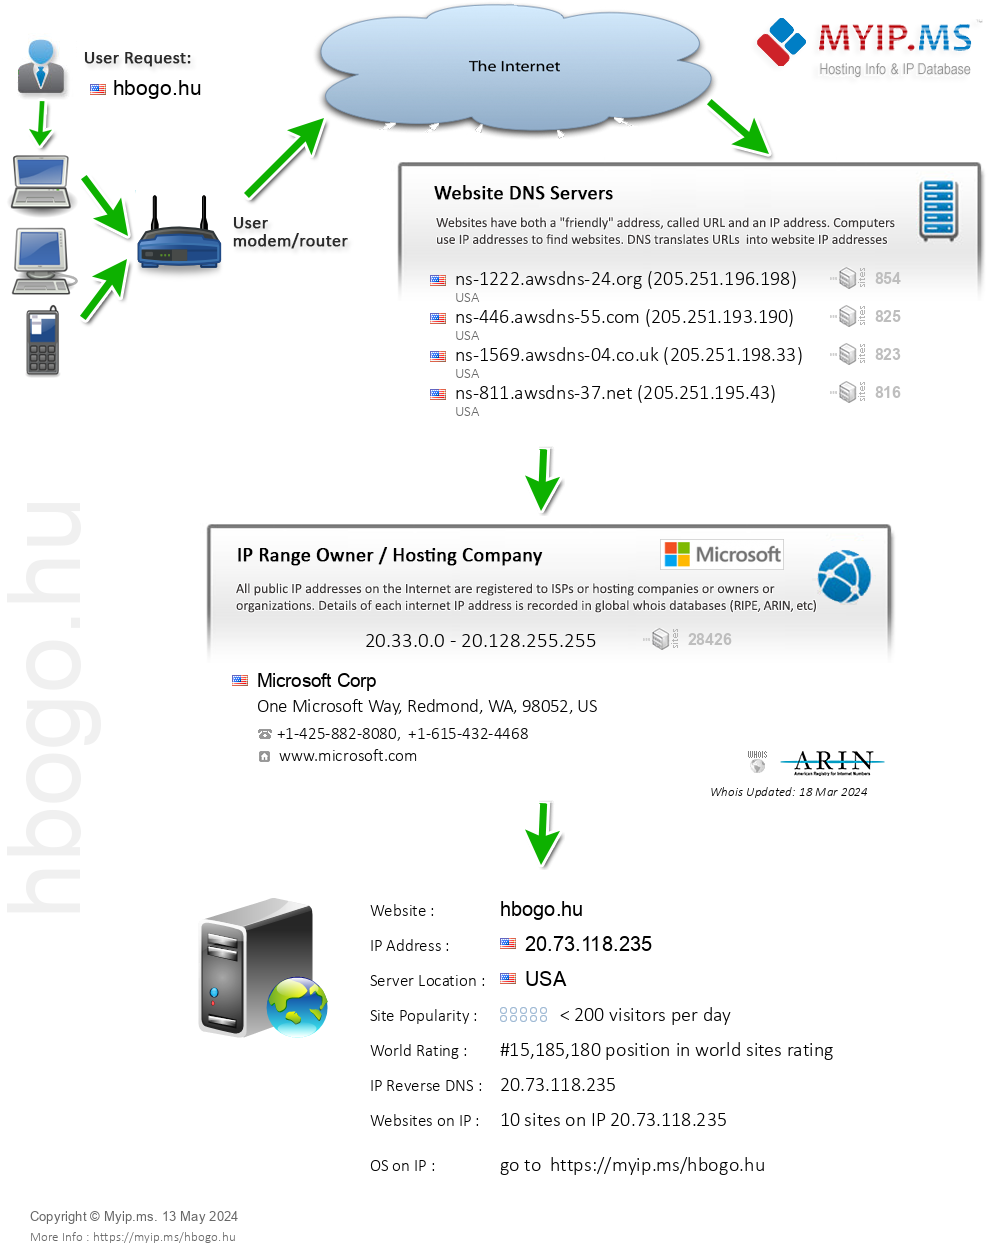 Hbogo.hu - Website Hosting Visual IP Diagram